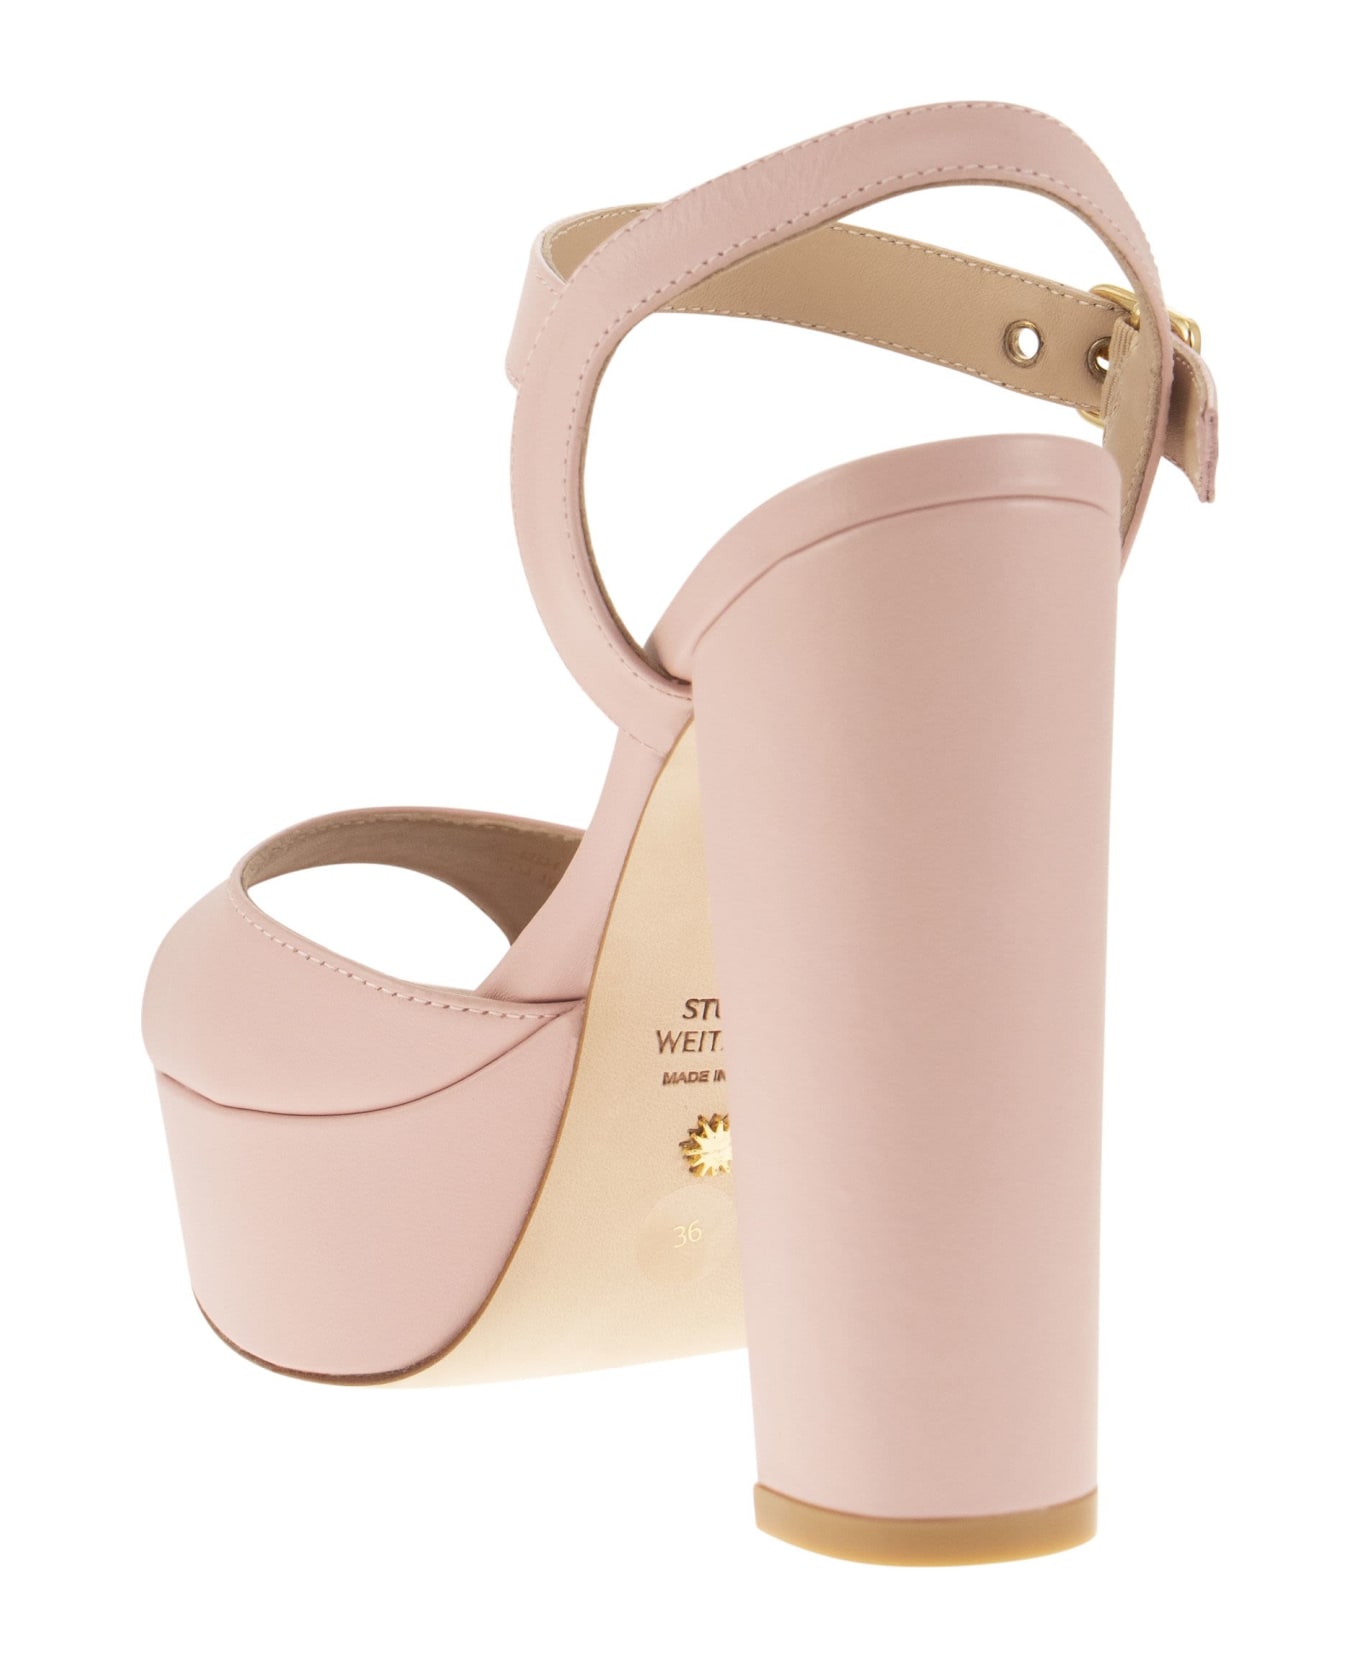 Stuart Weitzman Ryder - Leather Platform Sandals - Light Pink